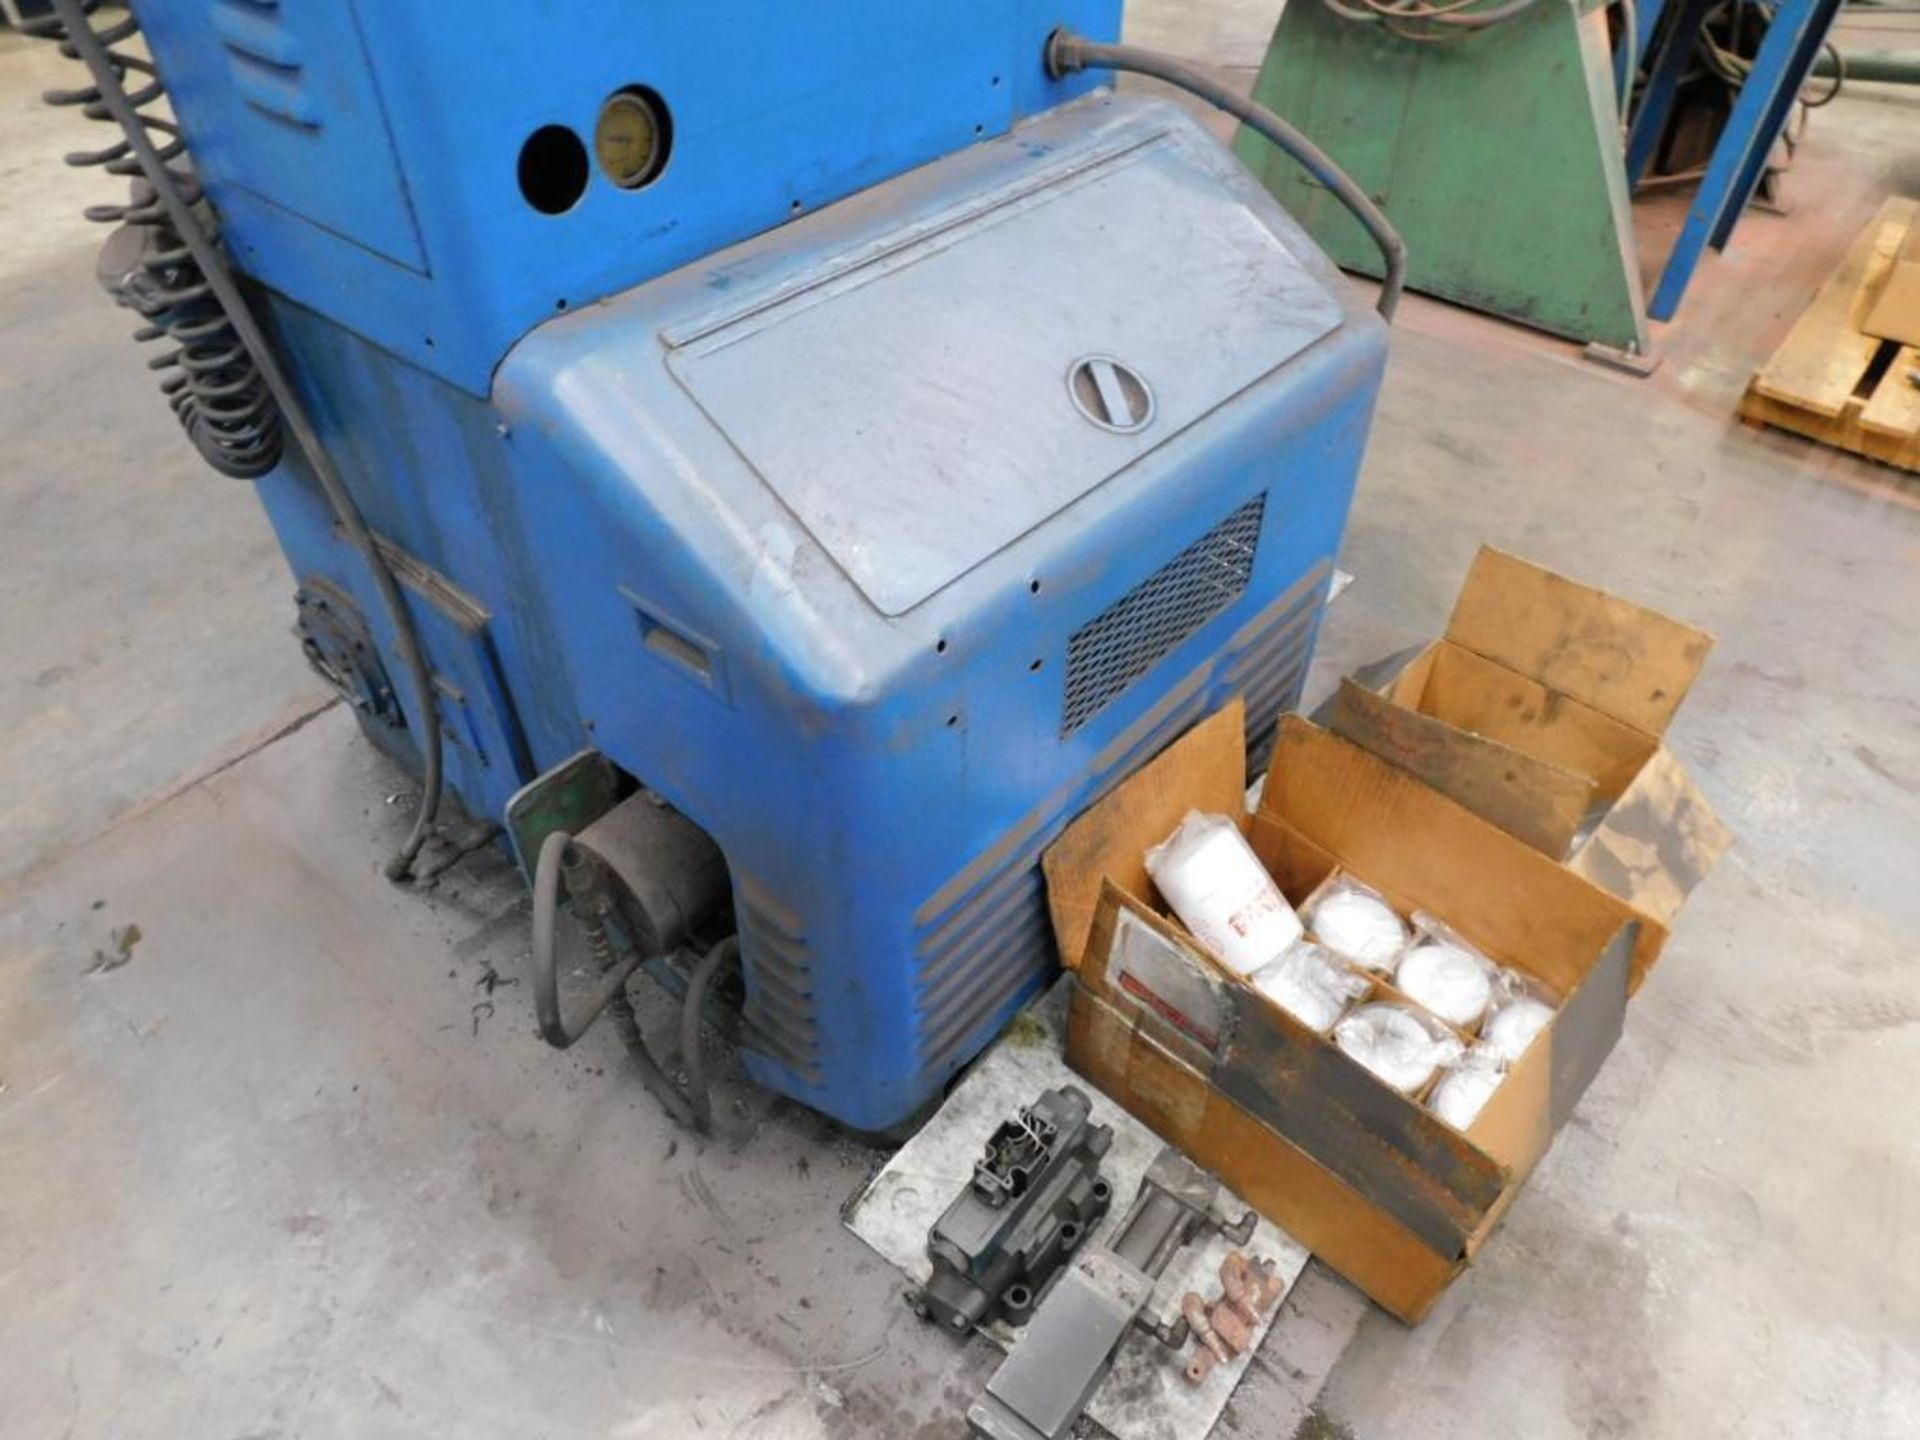 Hydramet Powder Compacting Press, Hydraulic, Model HC12, 12.5 Ton Maximum Pressing Force, 3" Maximum - Image 12 of 18